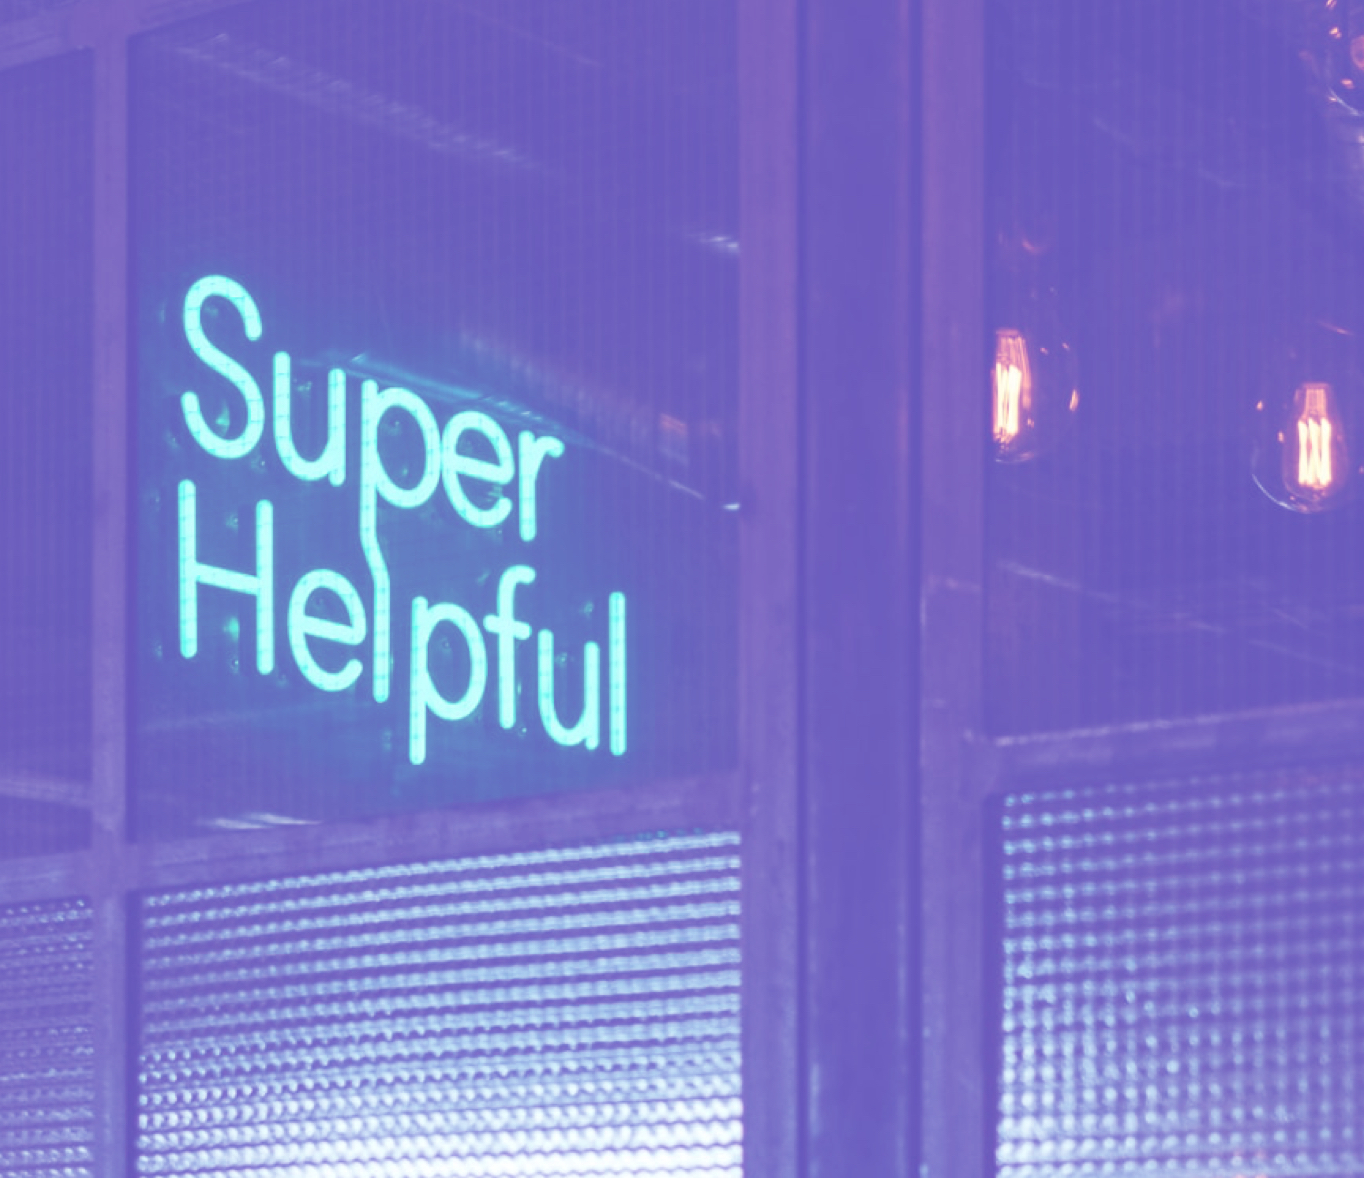 Blue neon letters reading "Super helpful"